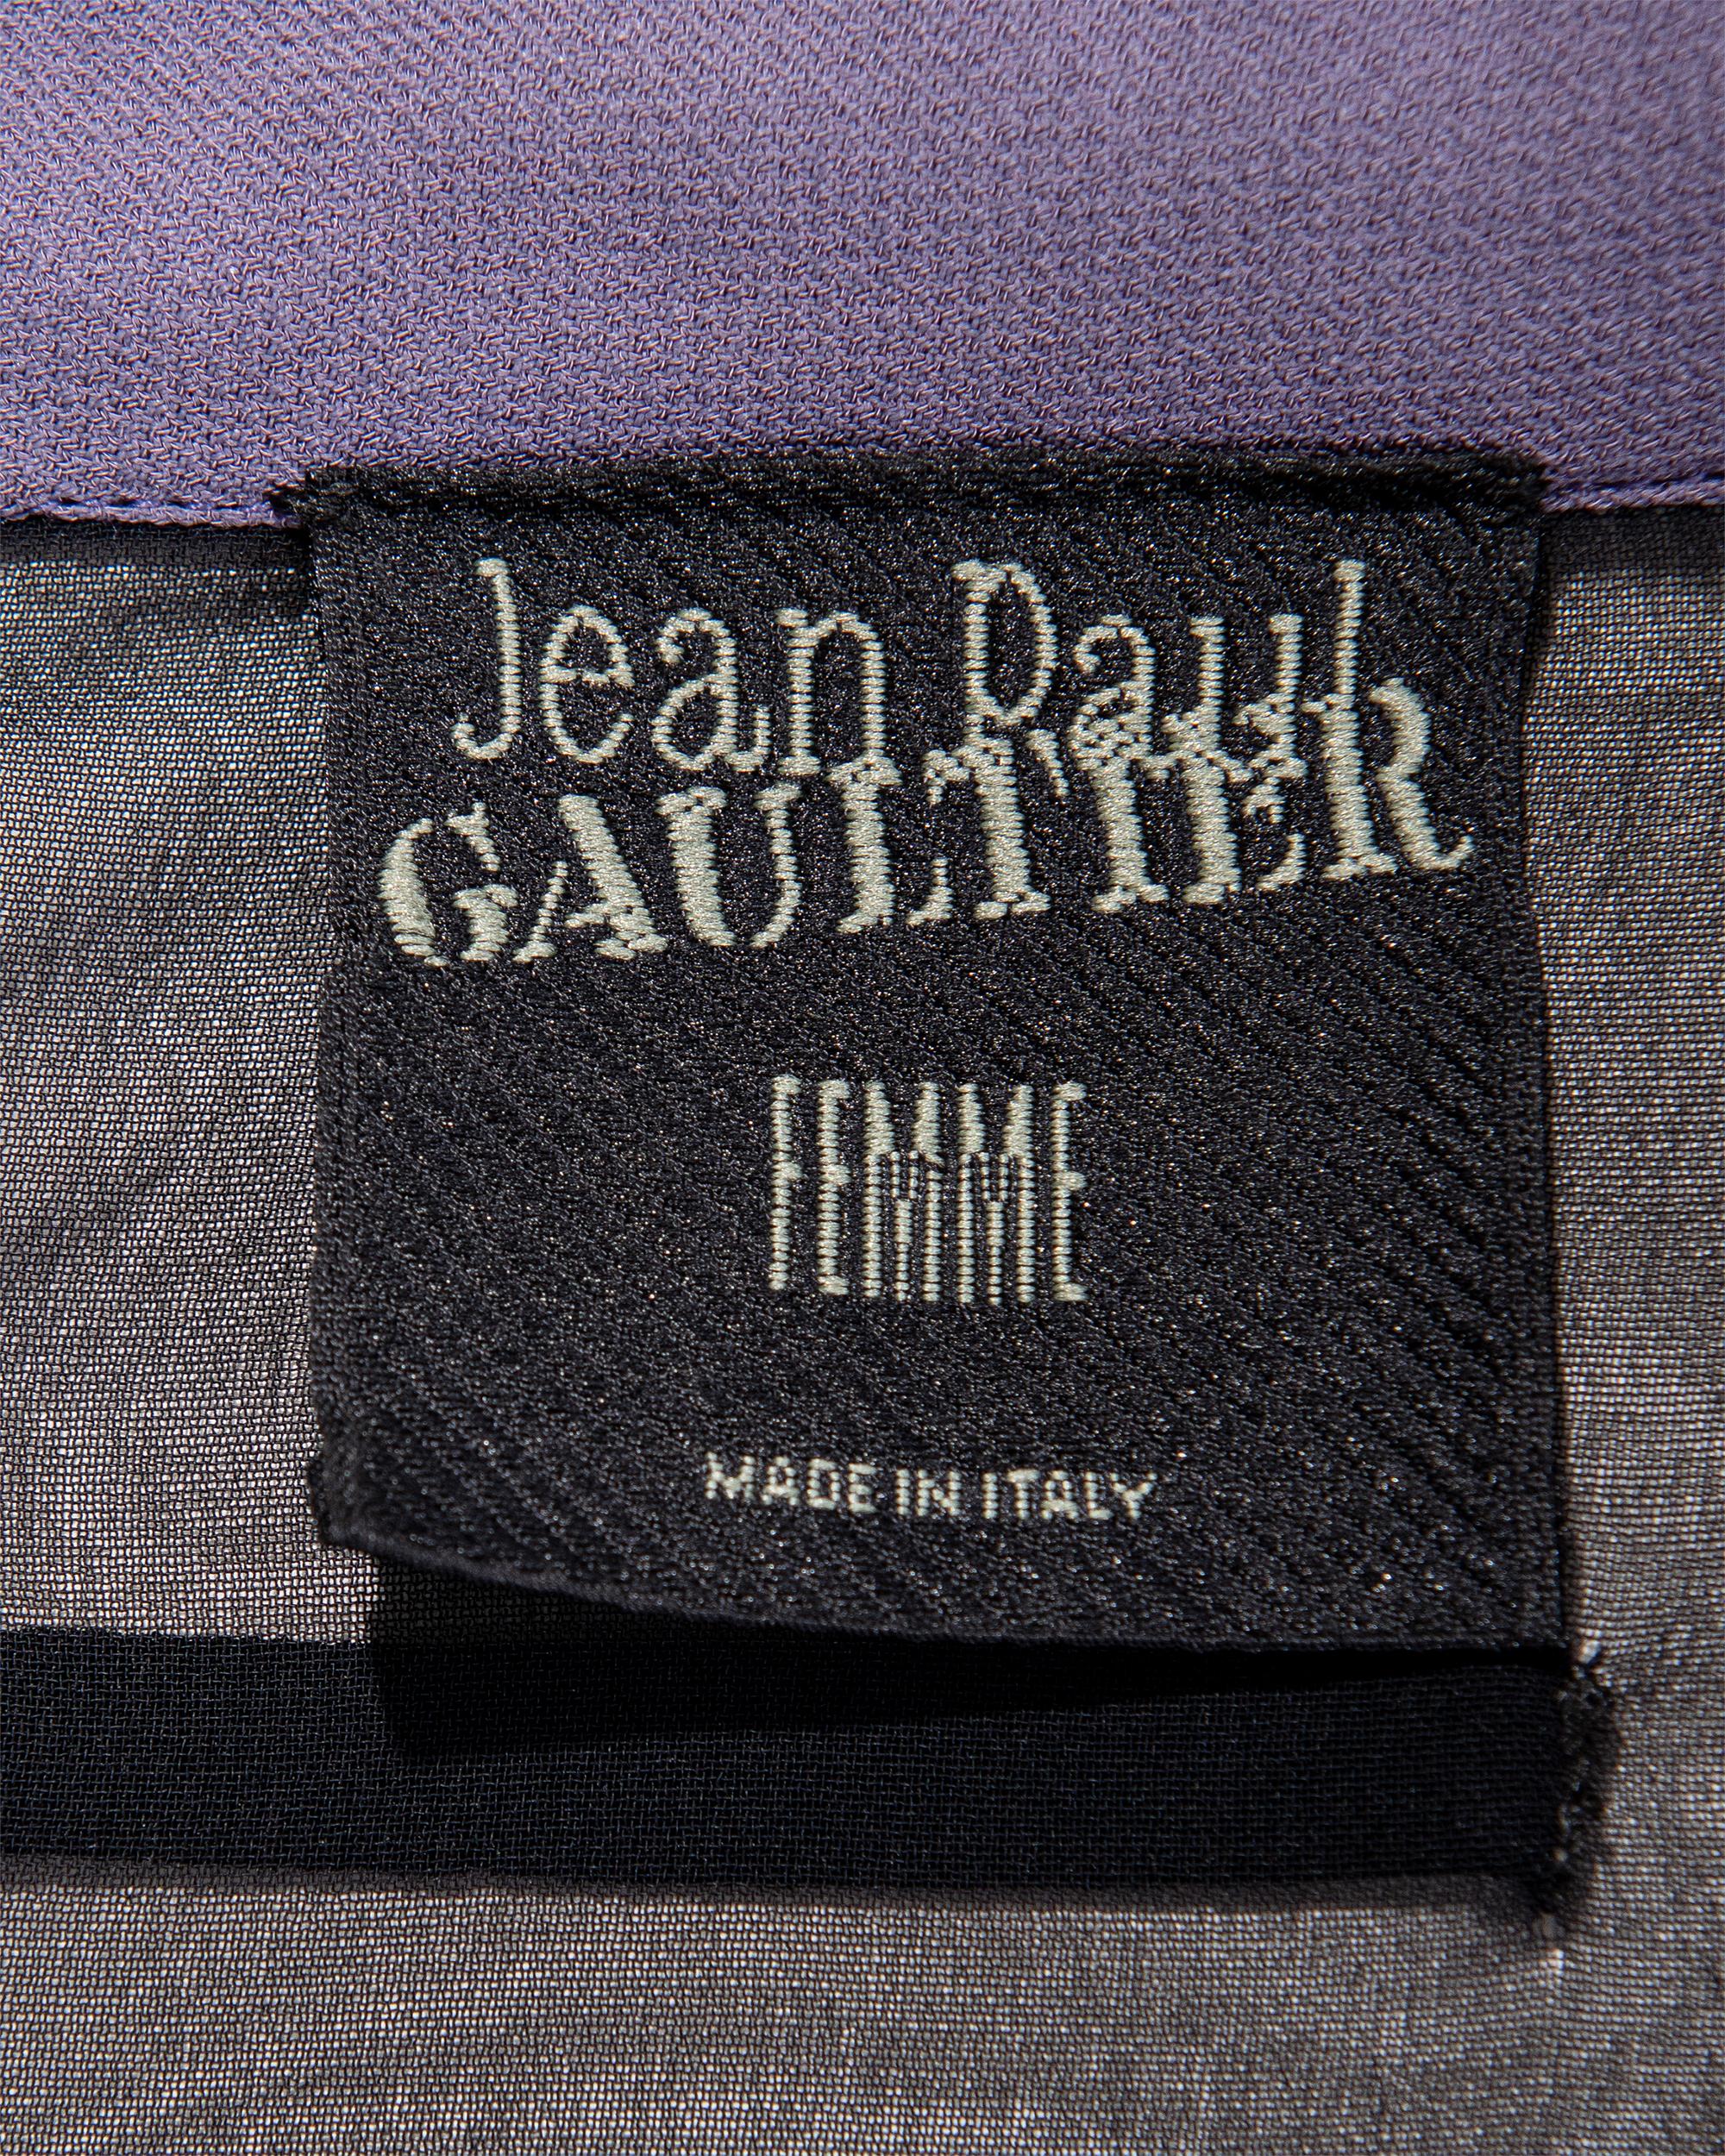 S/S 1996 Jean Paul Gaultier  'Cyberbaba' X-Ray Print Wrap Dress For Sale 6